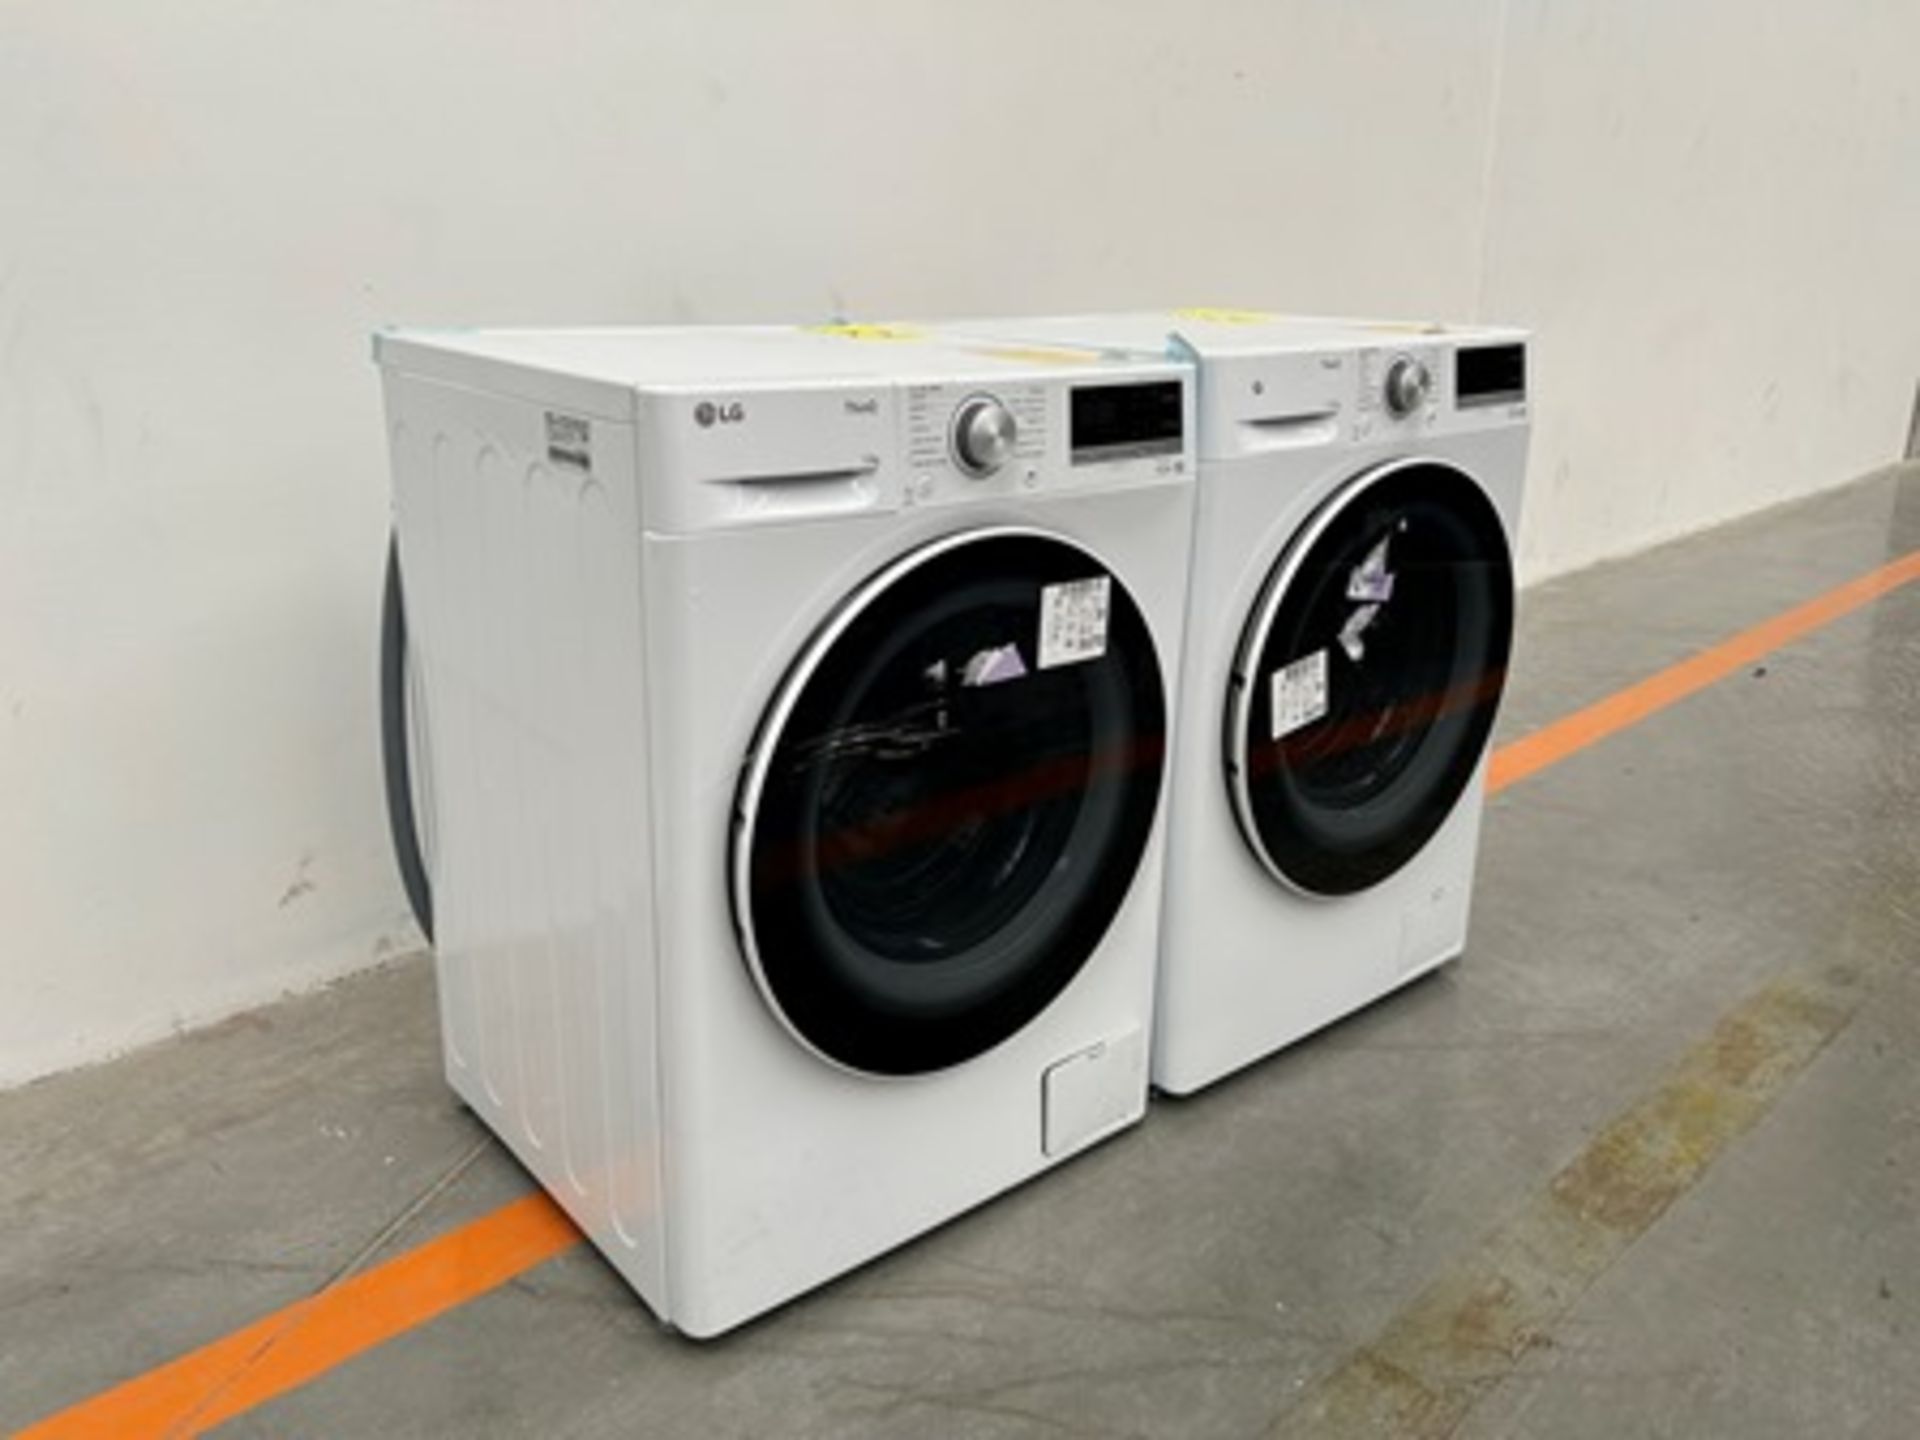 Lote de 2 lavadoras contiene: 1 Lavadora de 12 KG Marca LG, Modelo WM12WVC4S6, Serie 53874, Color B - Image 3 of 8